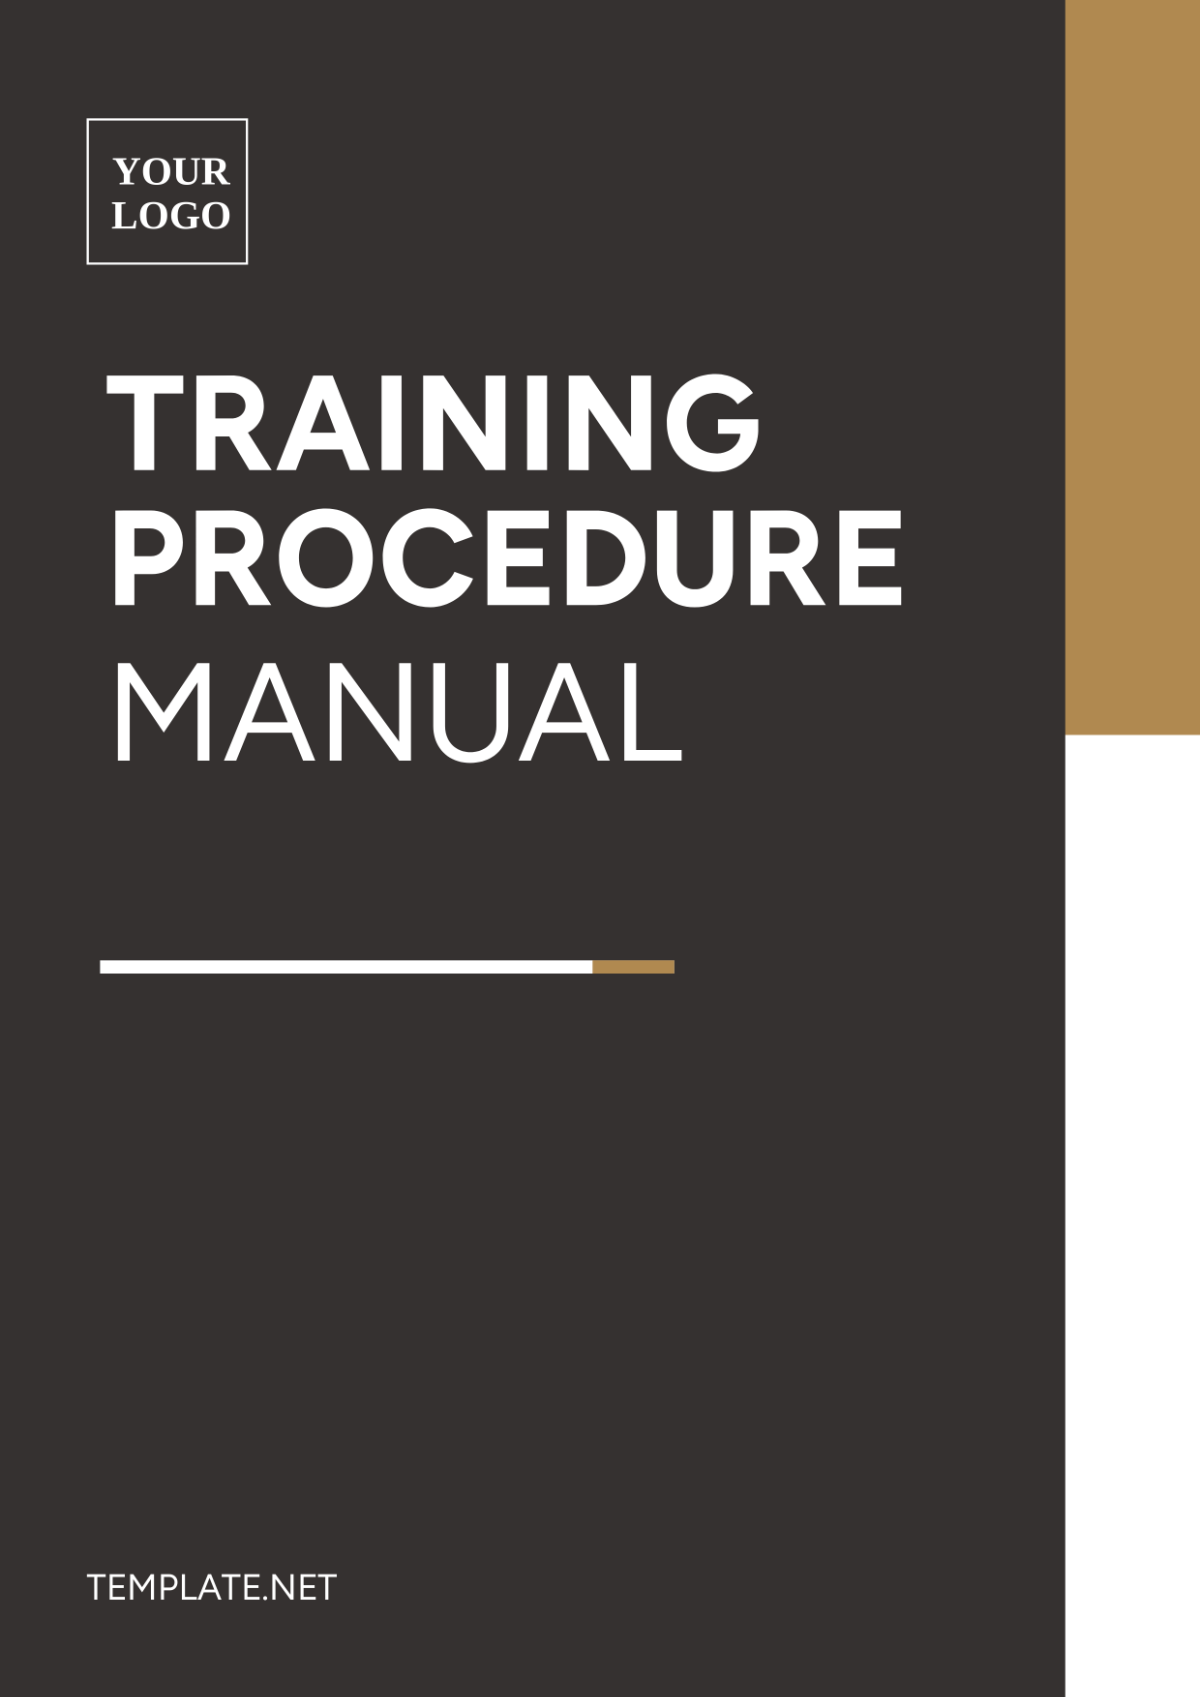 Training Procedure Manual Template